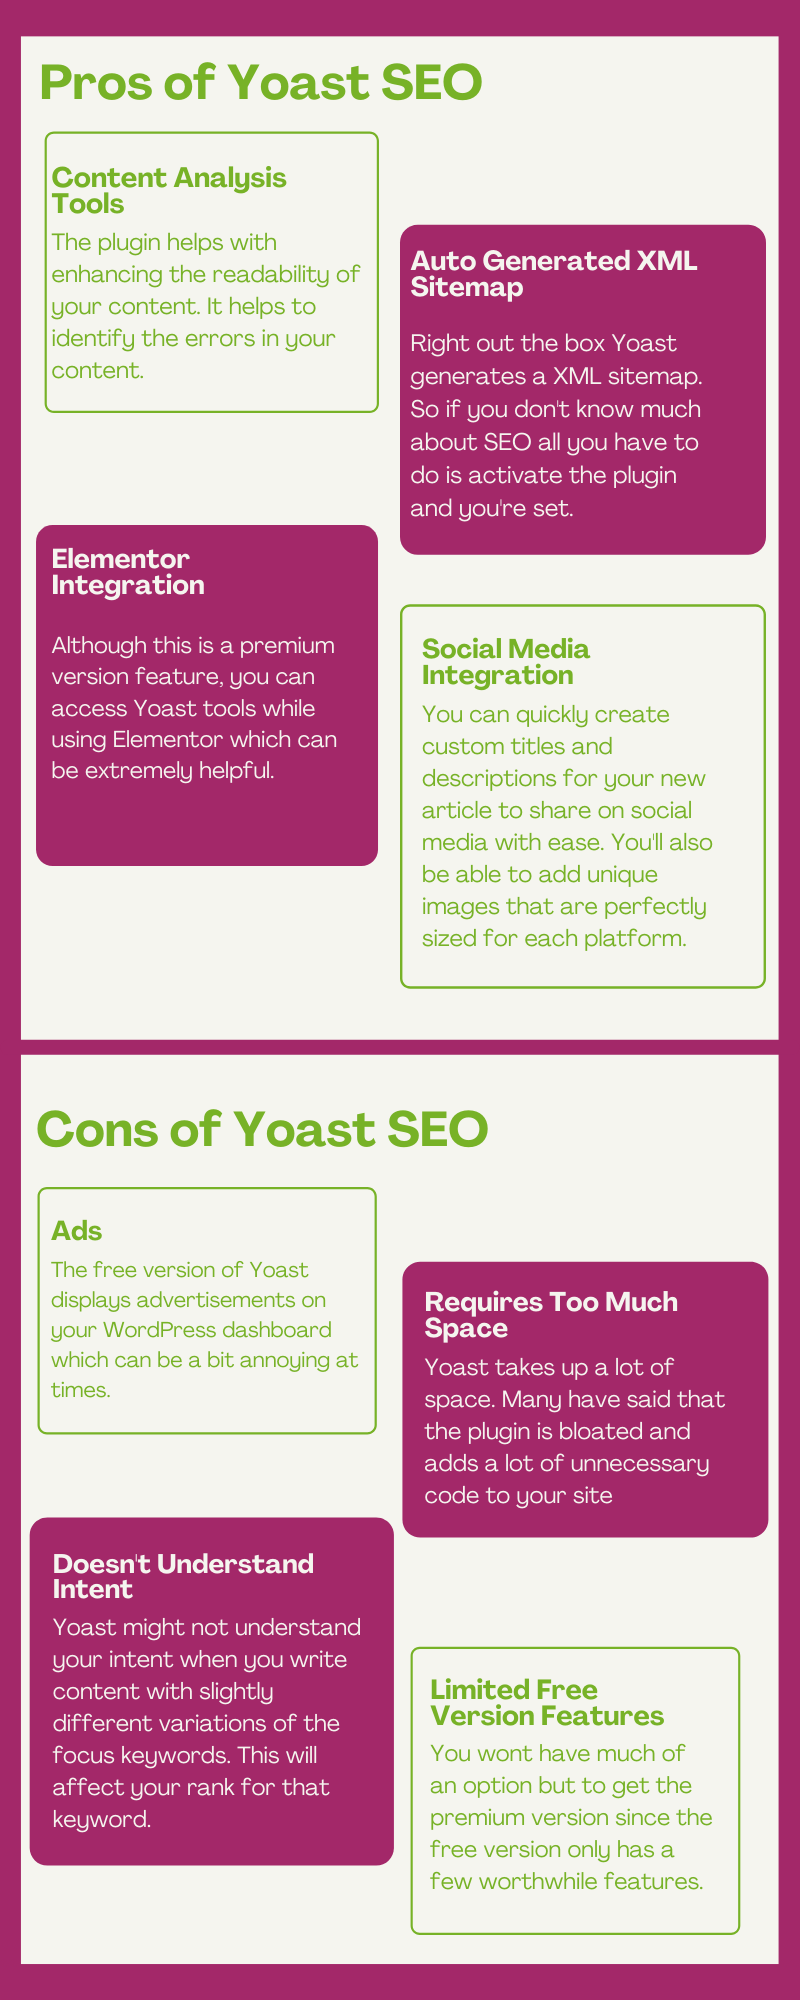 Yoast SEO Pros and Cons